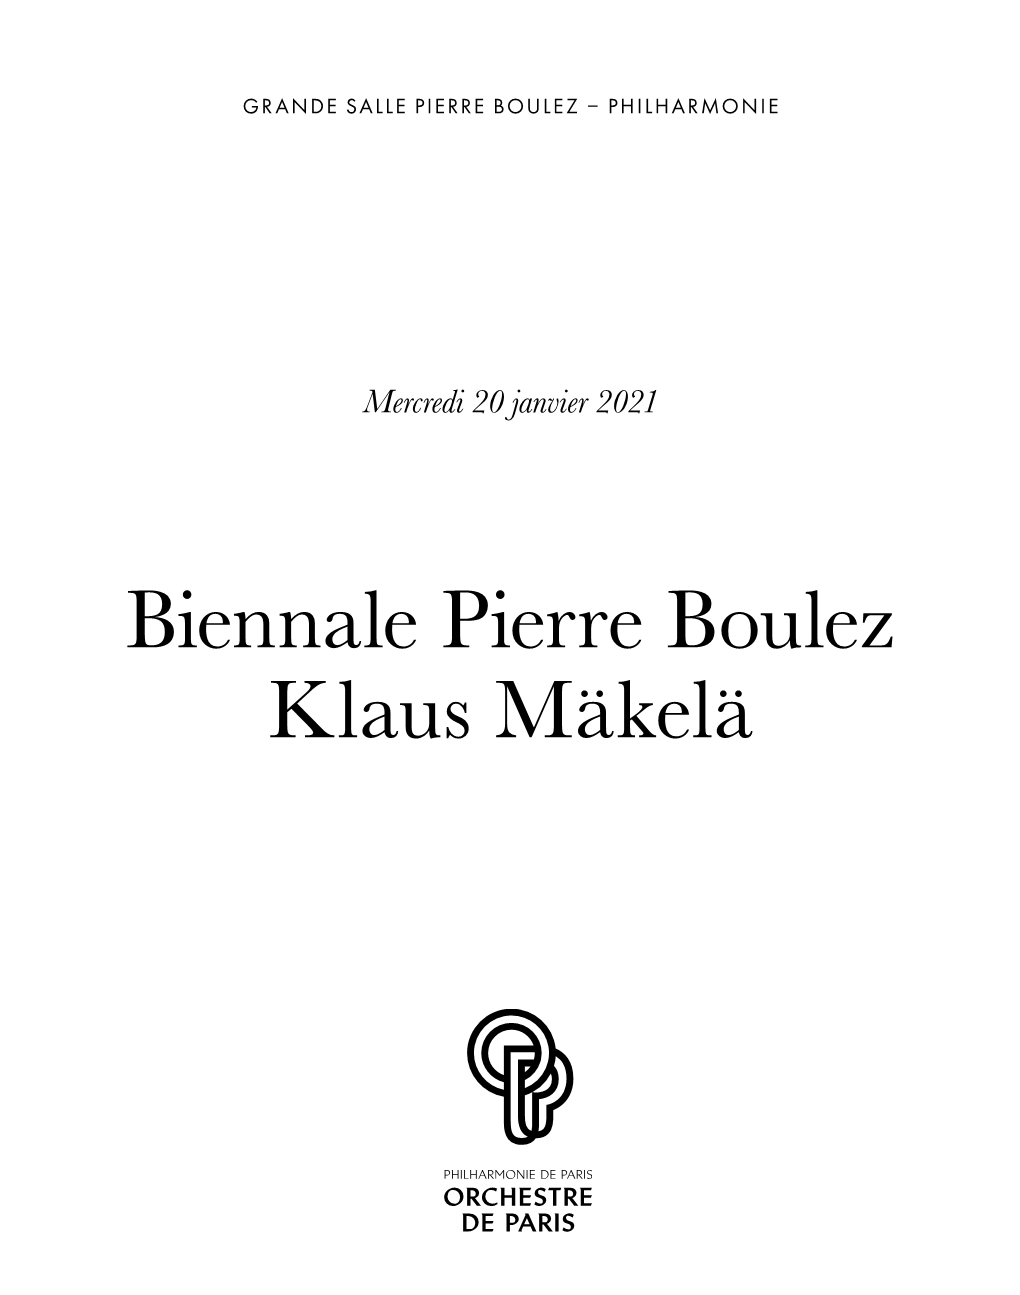 Biennale Pierre Boulez Klaus Mäkelä Logo Quadri Logo Niveau De Gris Logo Niveau De Gris Logo Niveau De Gris + Baseline Sans Baseline Si Logo Moins De 20Mm